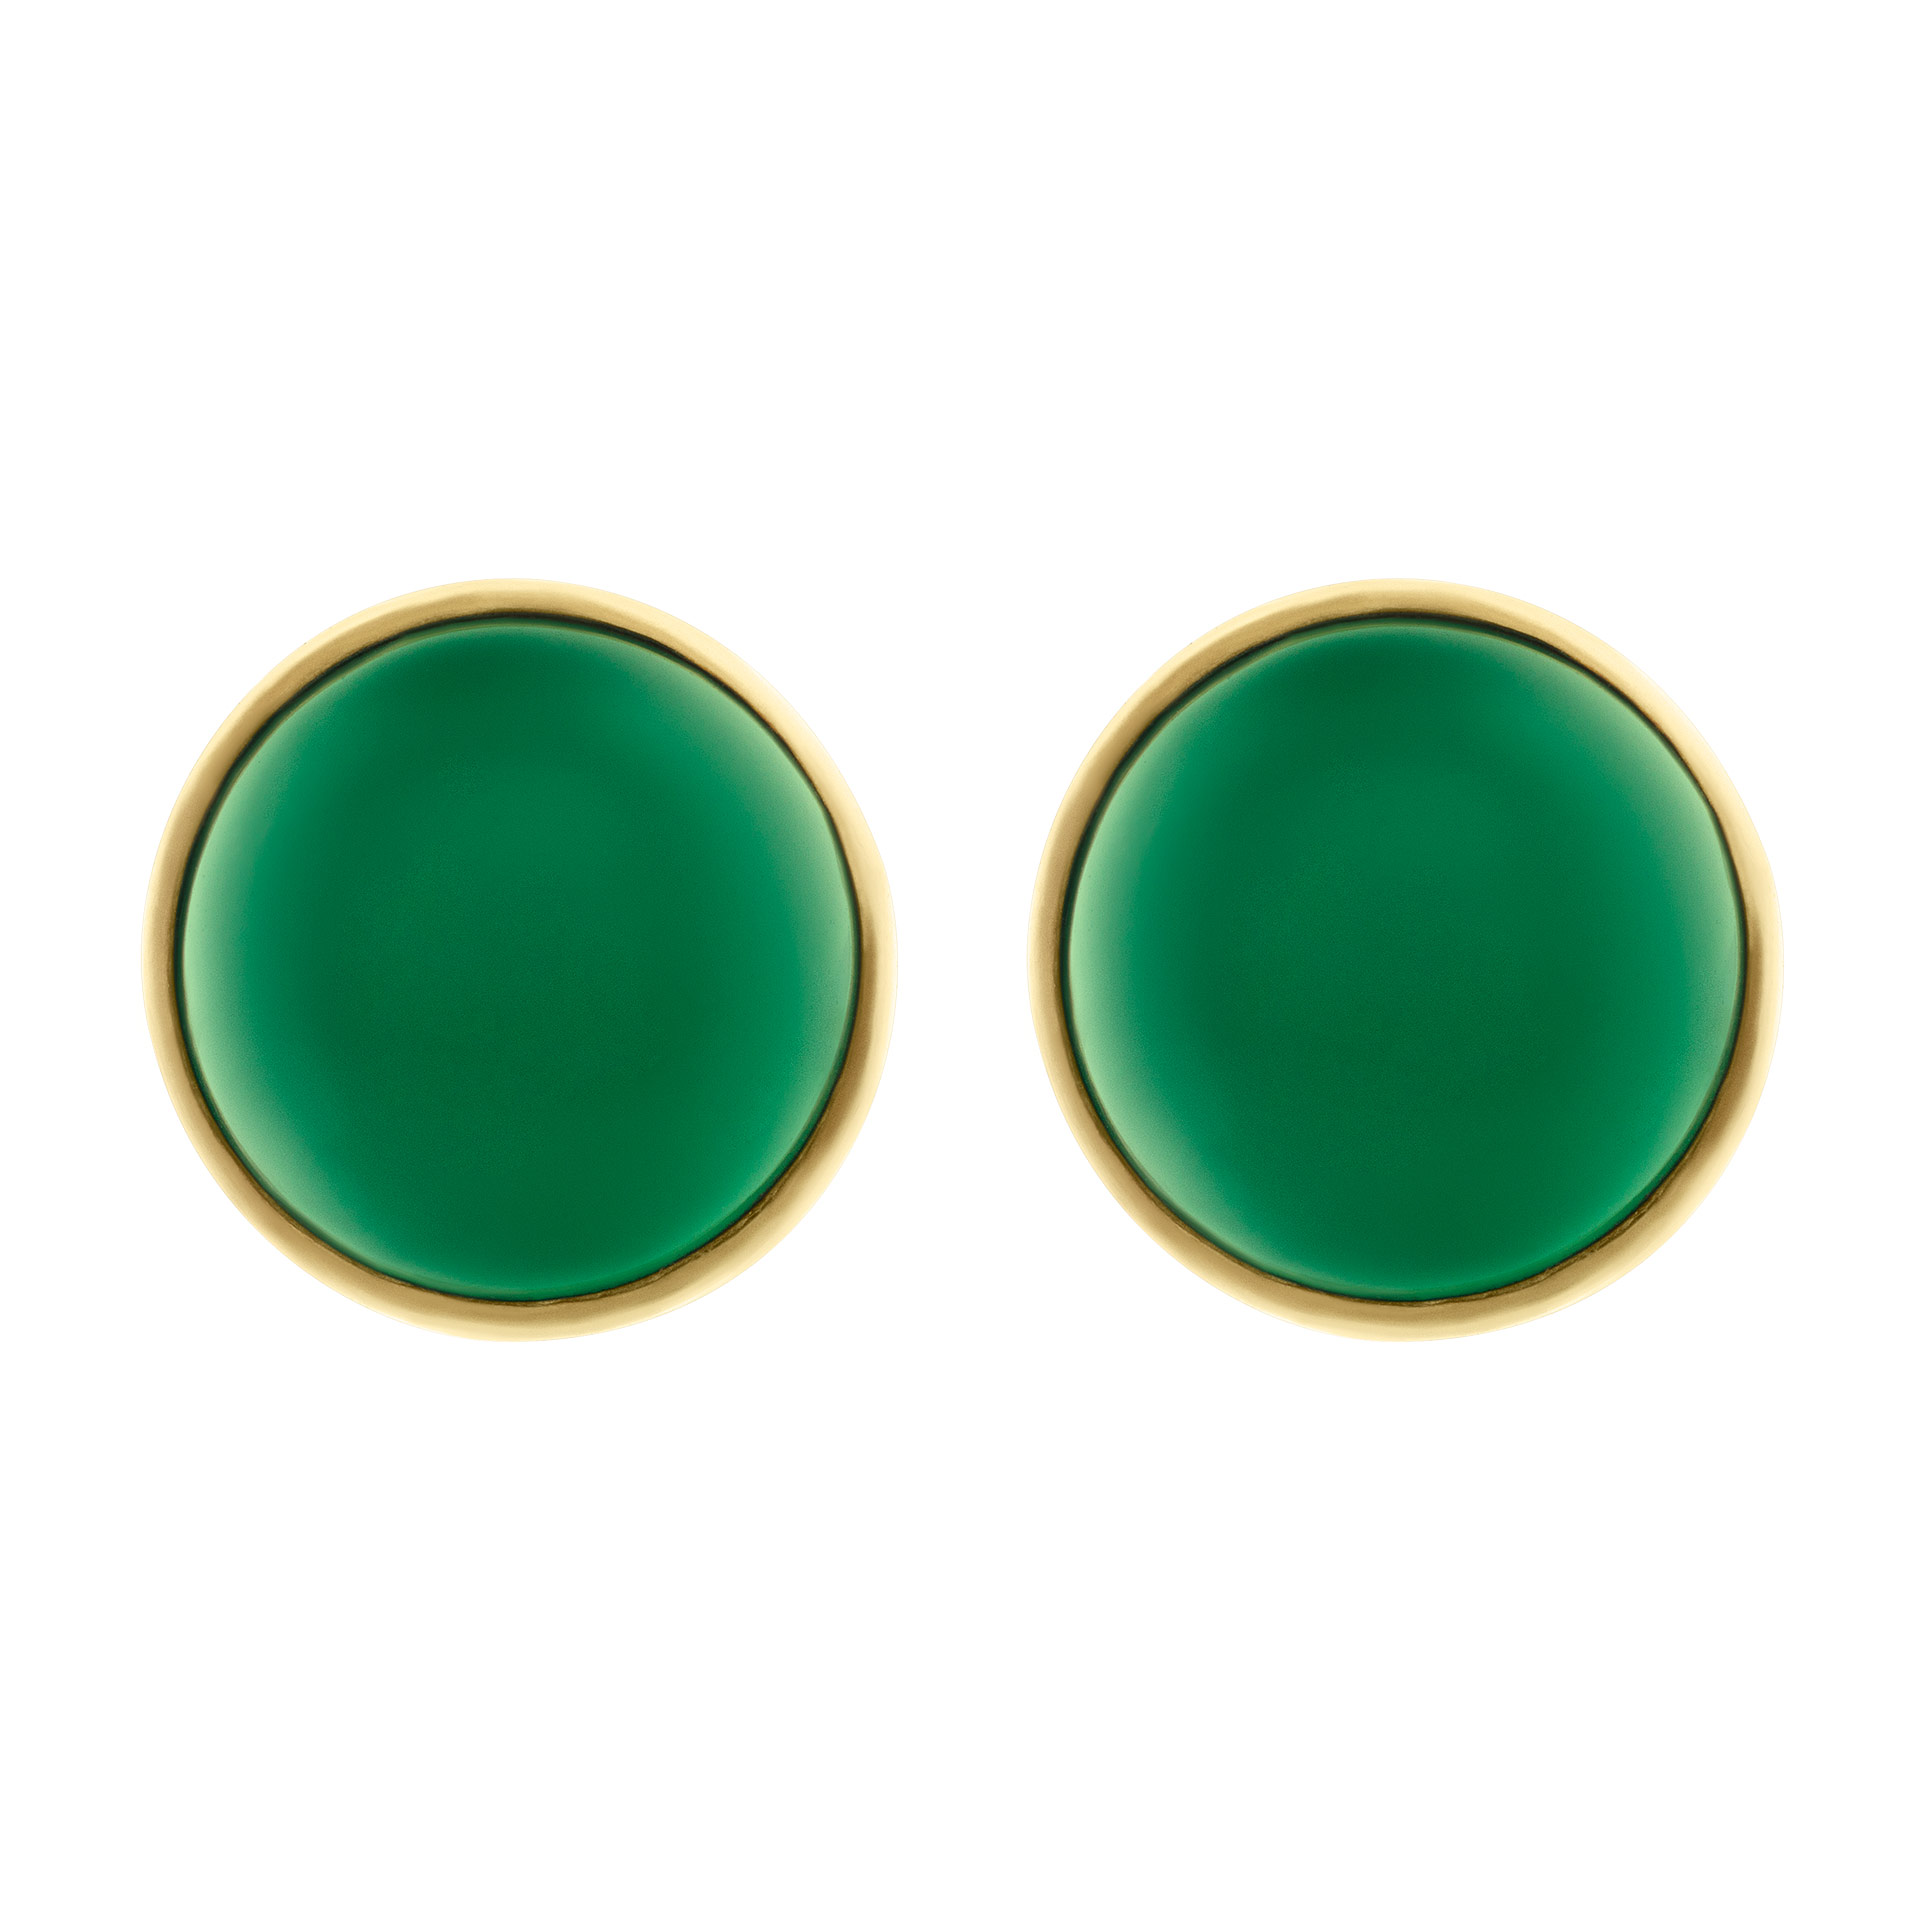 Button cabachon emerald earrings 18k yellow gold